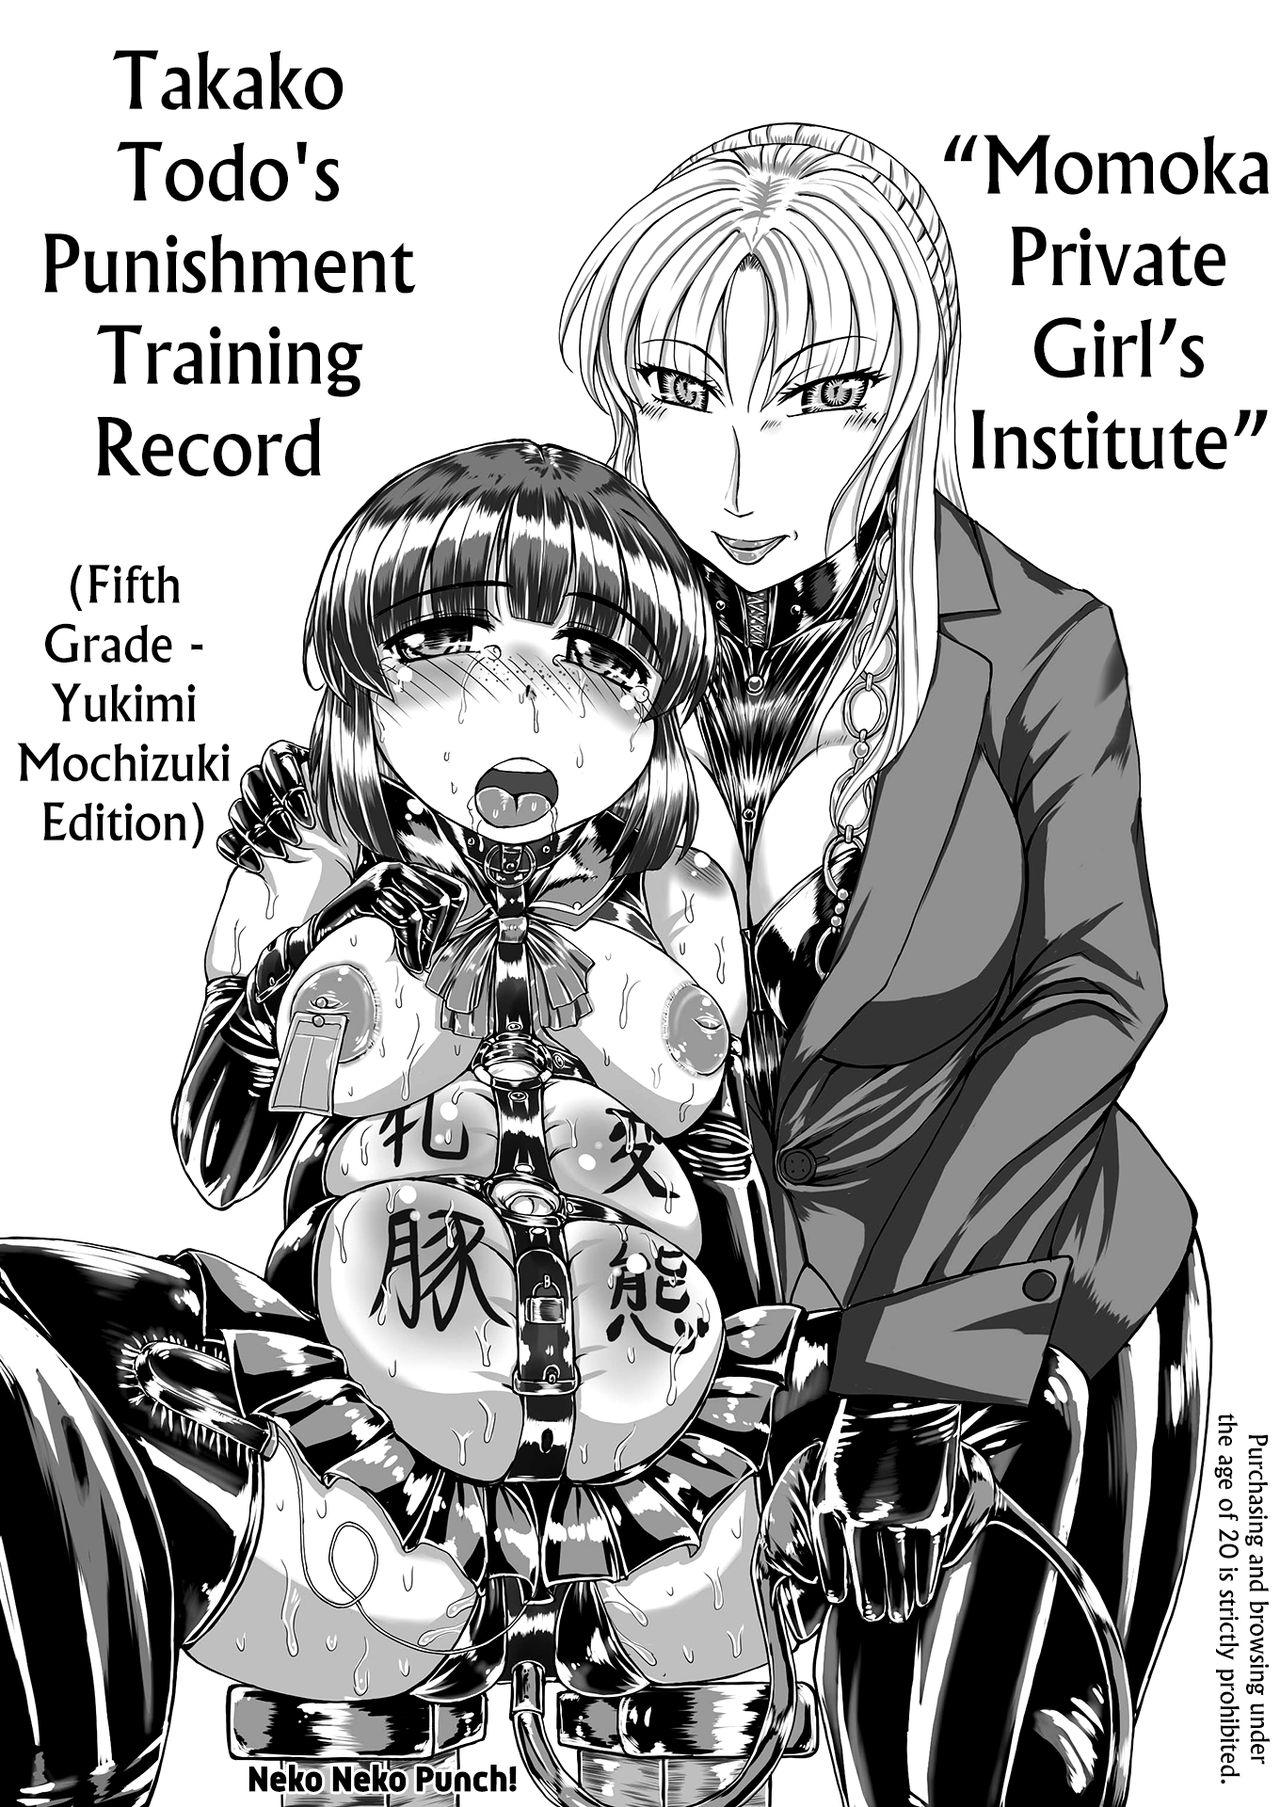 [Neko Neko Panchu!] [Momoka Private Girls Institute] [Takako Todo's Punishment Training Record] (Fifth Grade - Yukimi Mochizuki Edition) [English] 0